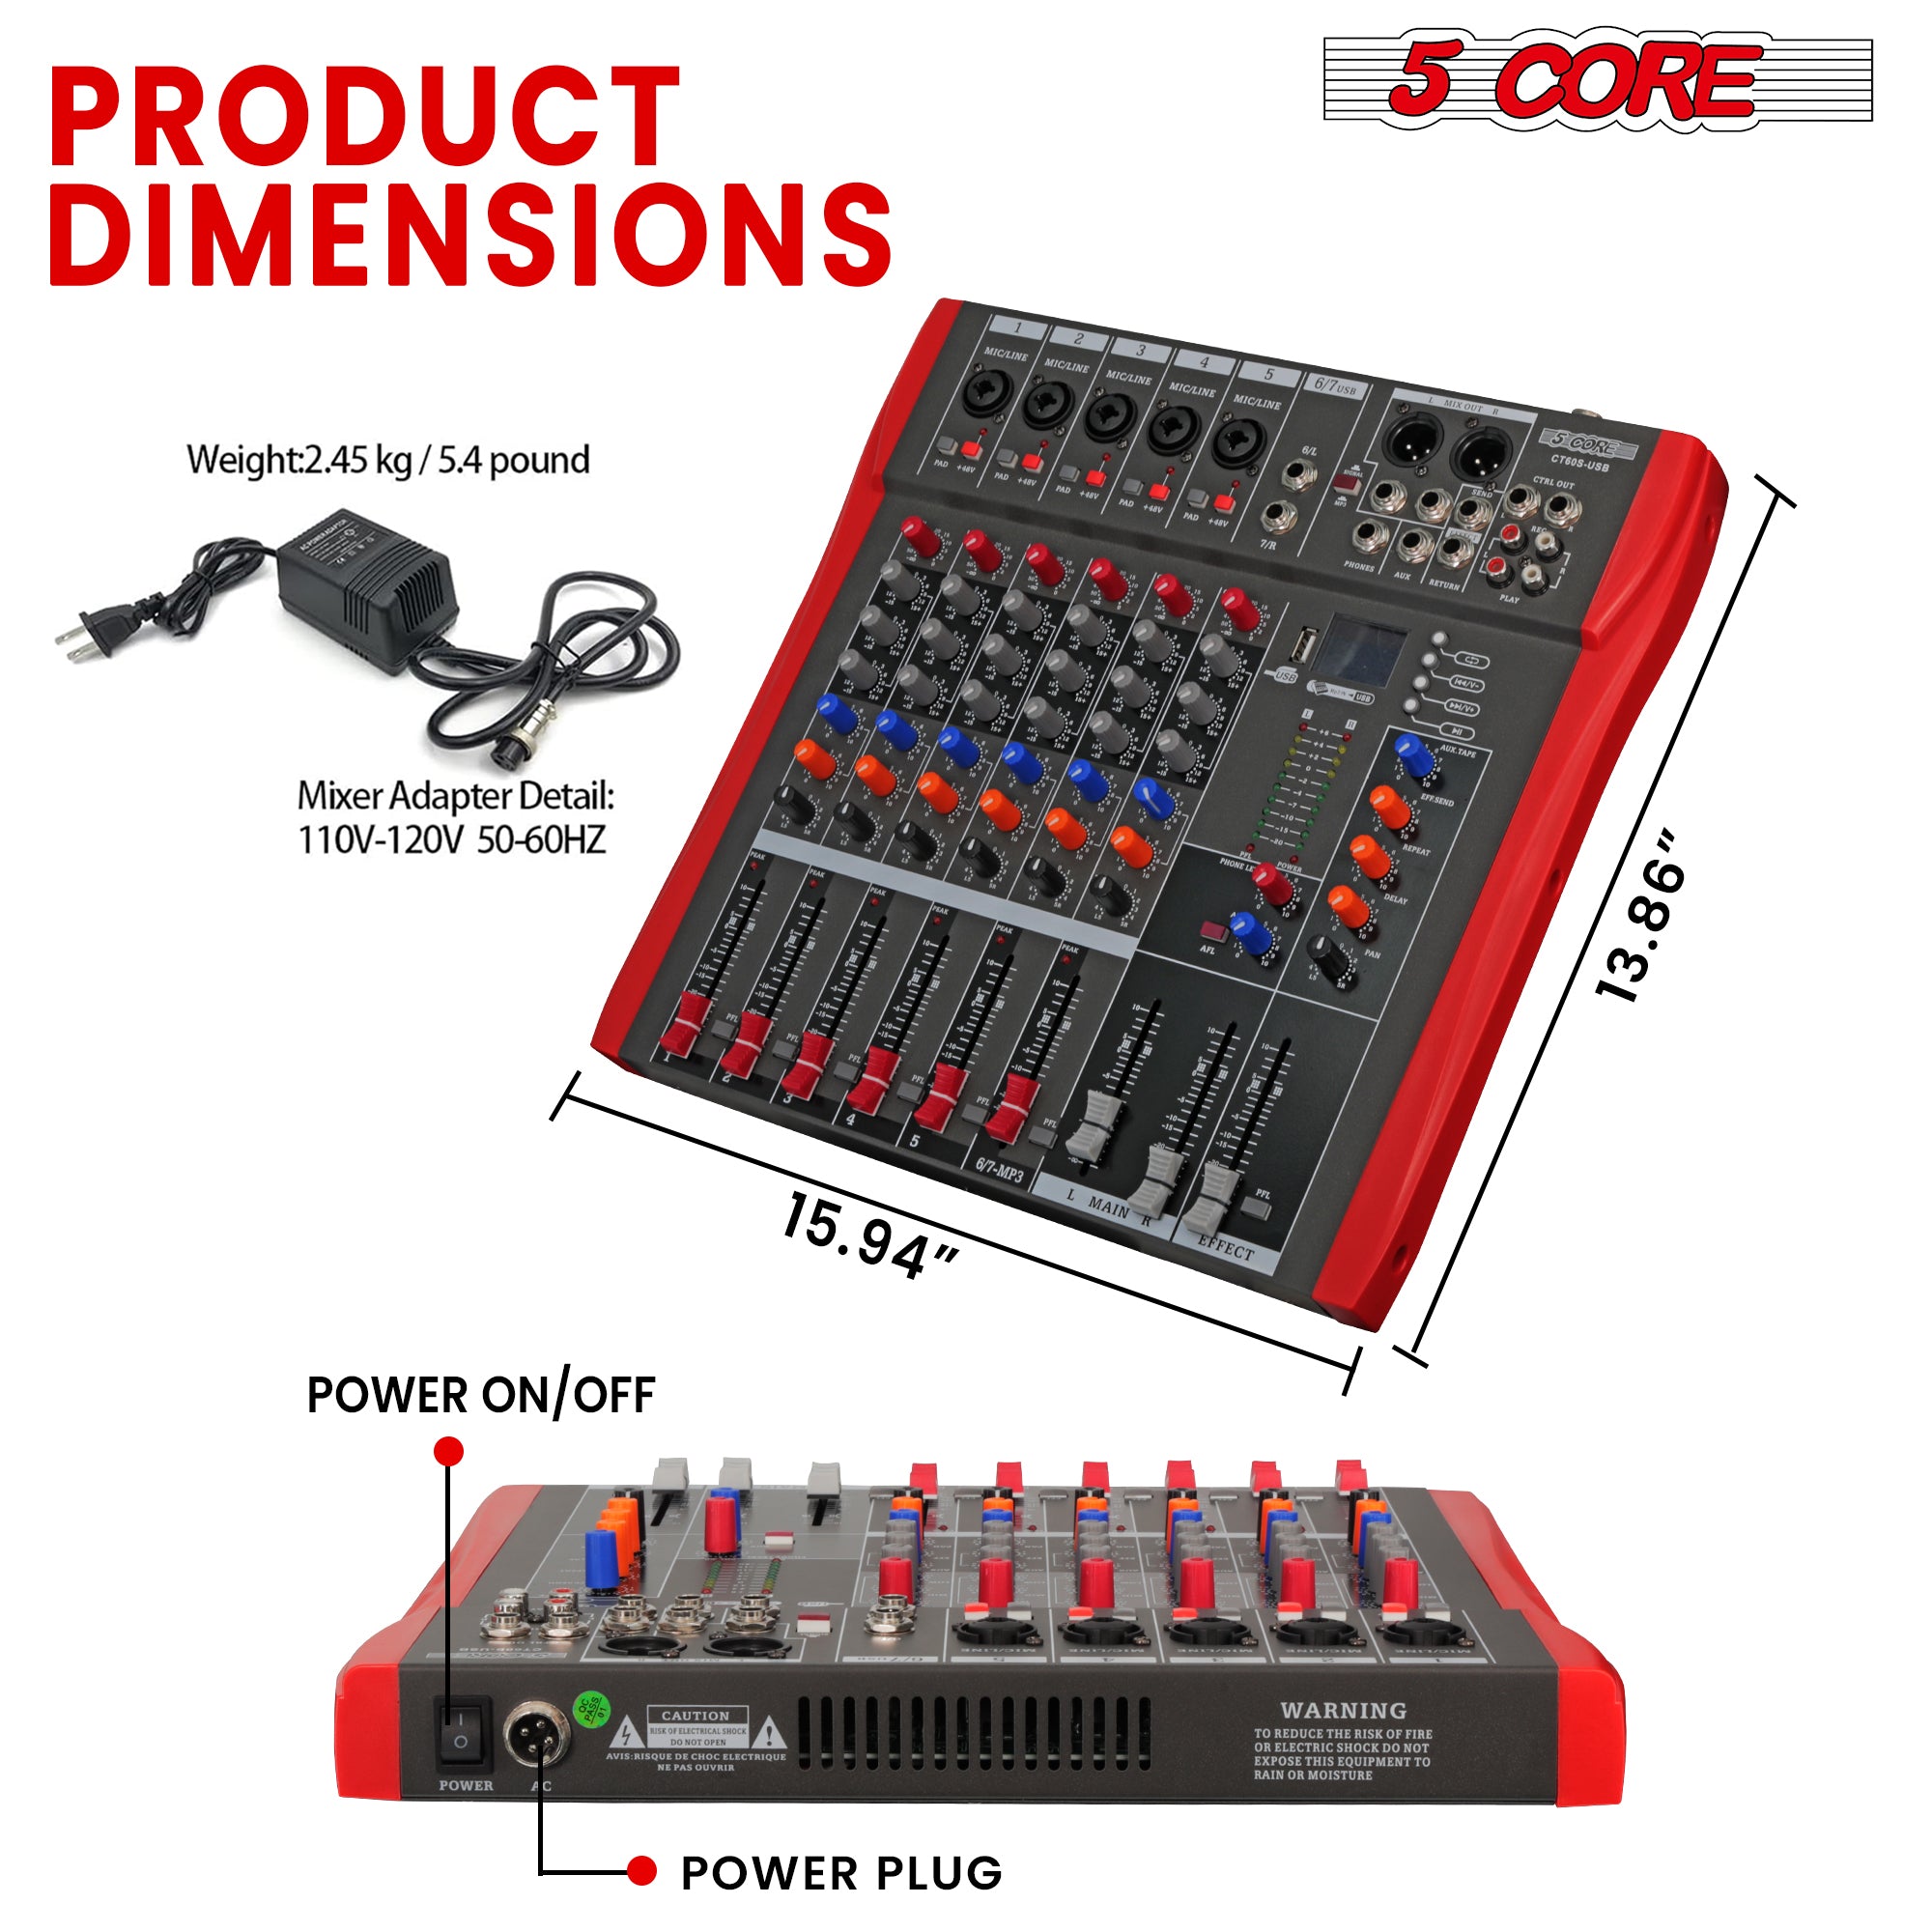 5 Core Audio Mixer DJ Equipment Digital Sound Board Karaoke XLR Mixers Professional 6 Channel Bluetooth USB w Effects for Recording Music Studio PC Podcast Instruments Consola De Sonido - MX 6CH